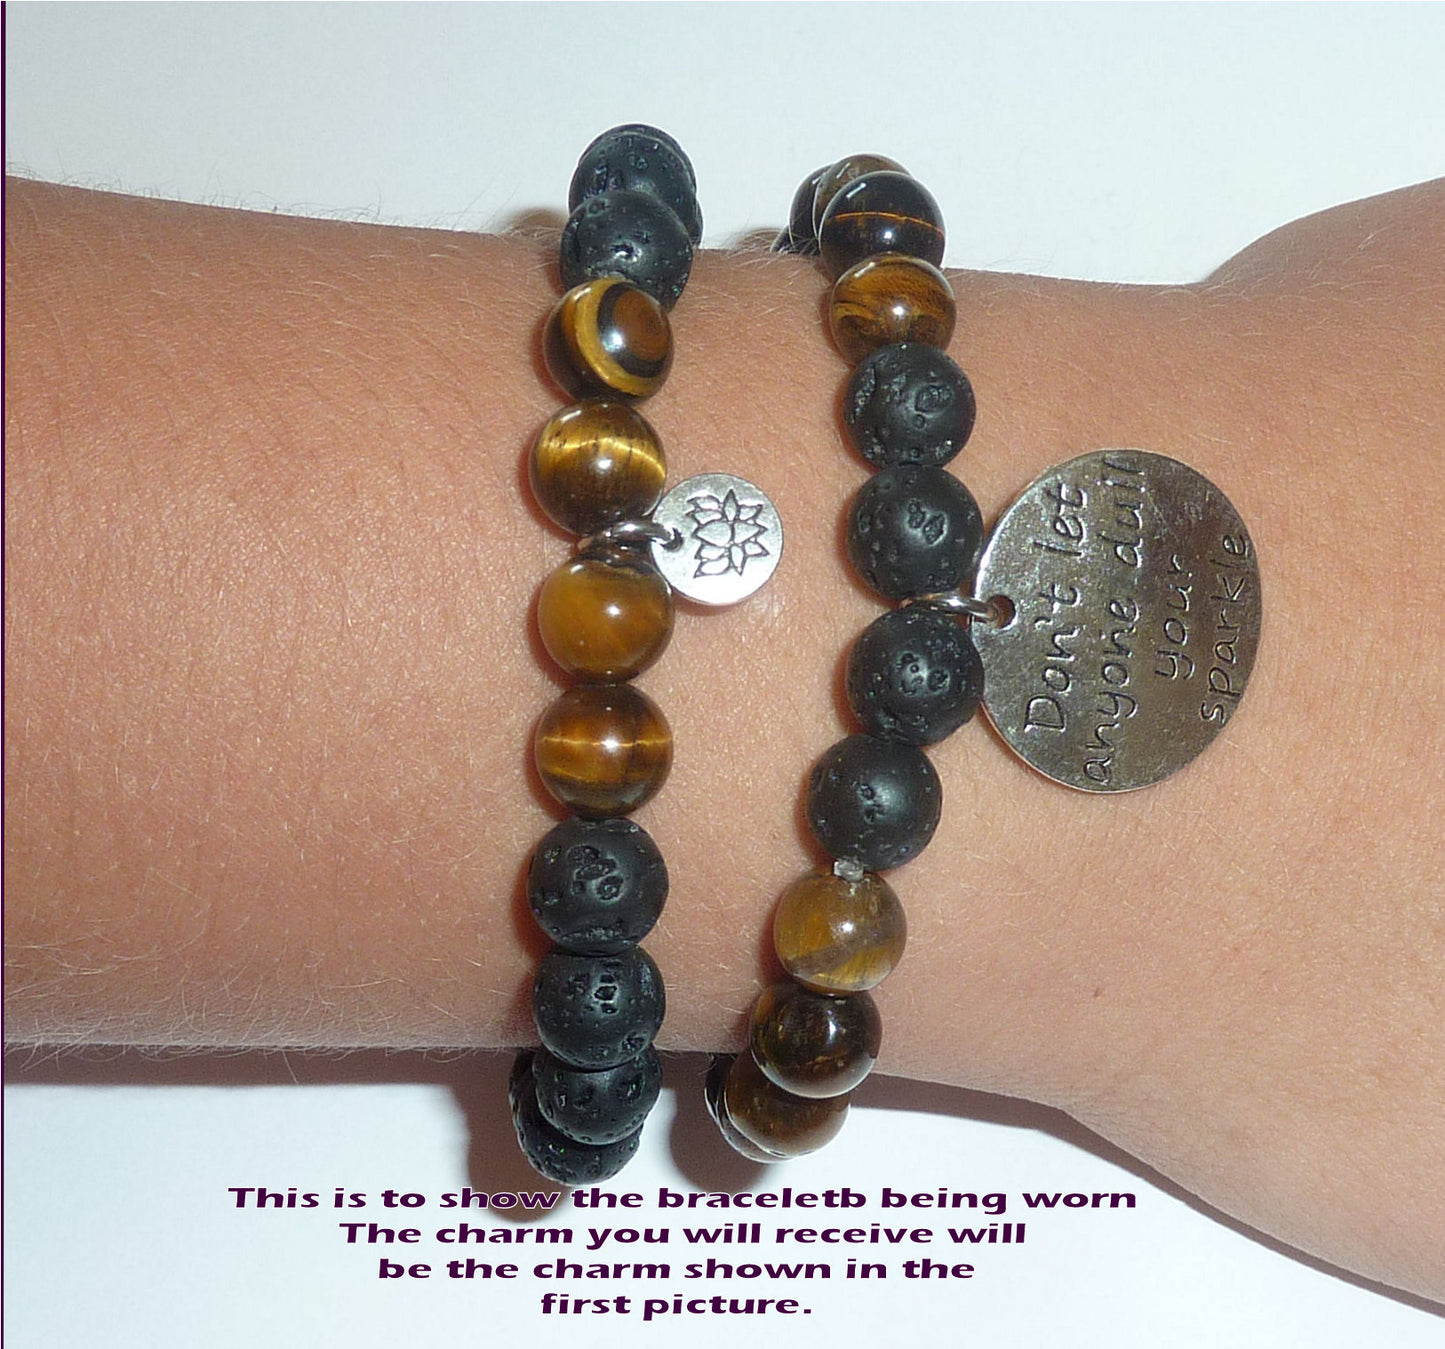 I Love Basketball - Women's Tiger Eye & Black Lava Diffuser Yoga Beads Charm Stretch Bracelet Gift Set